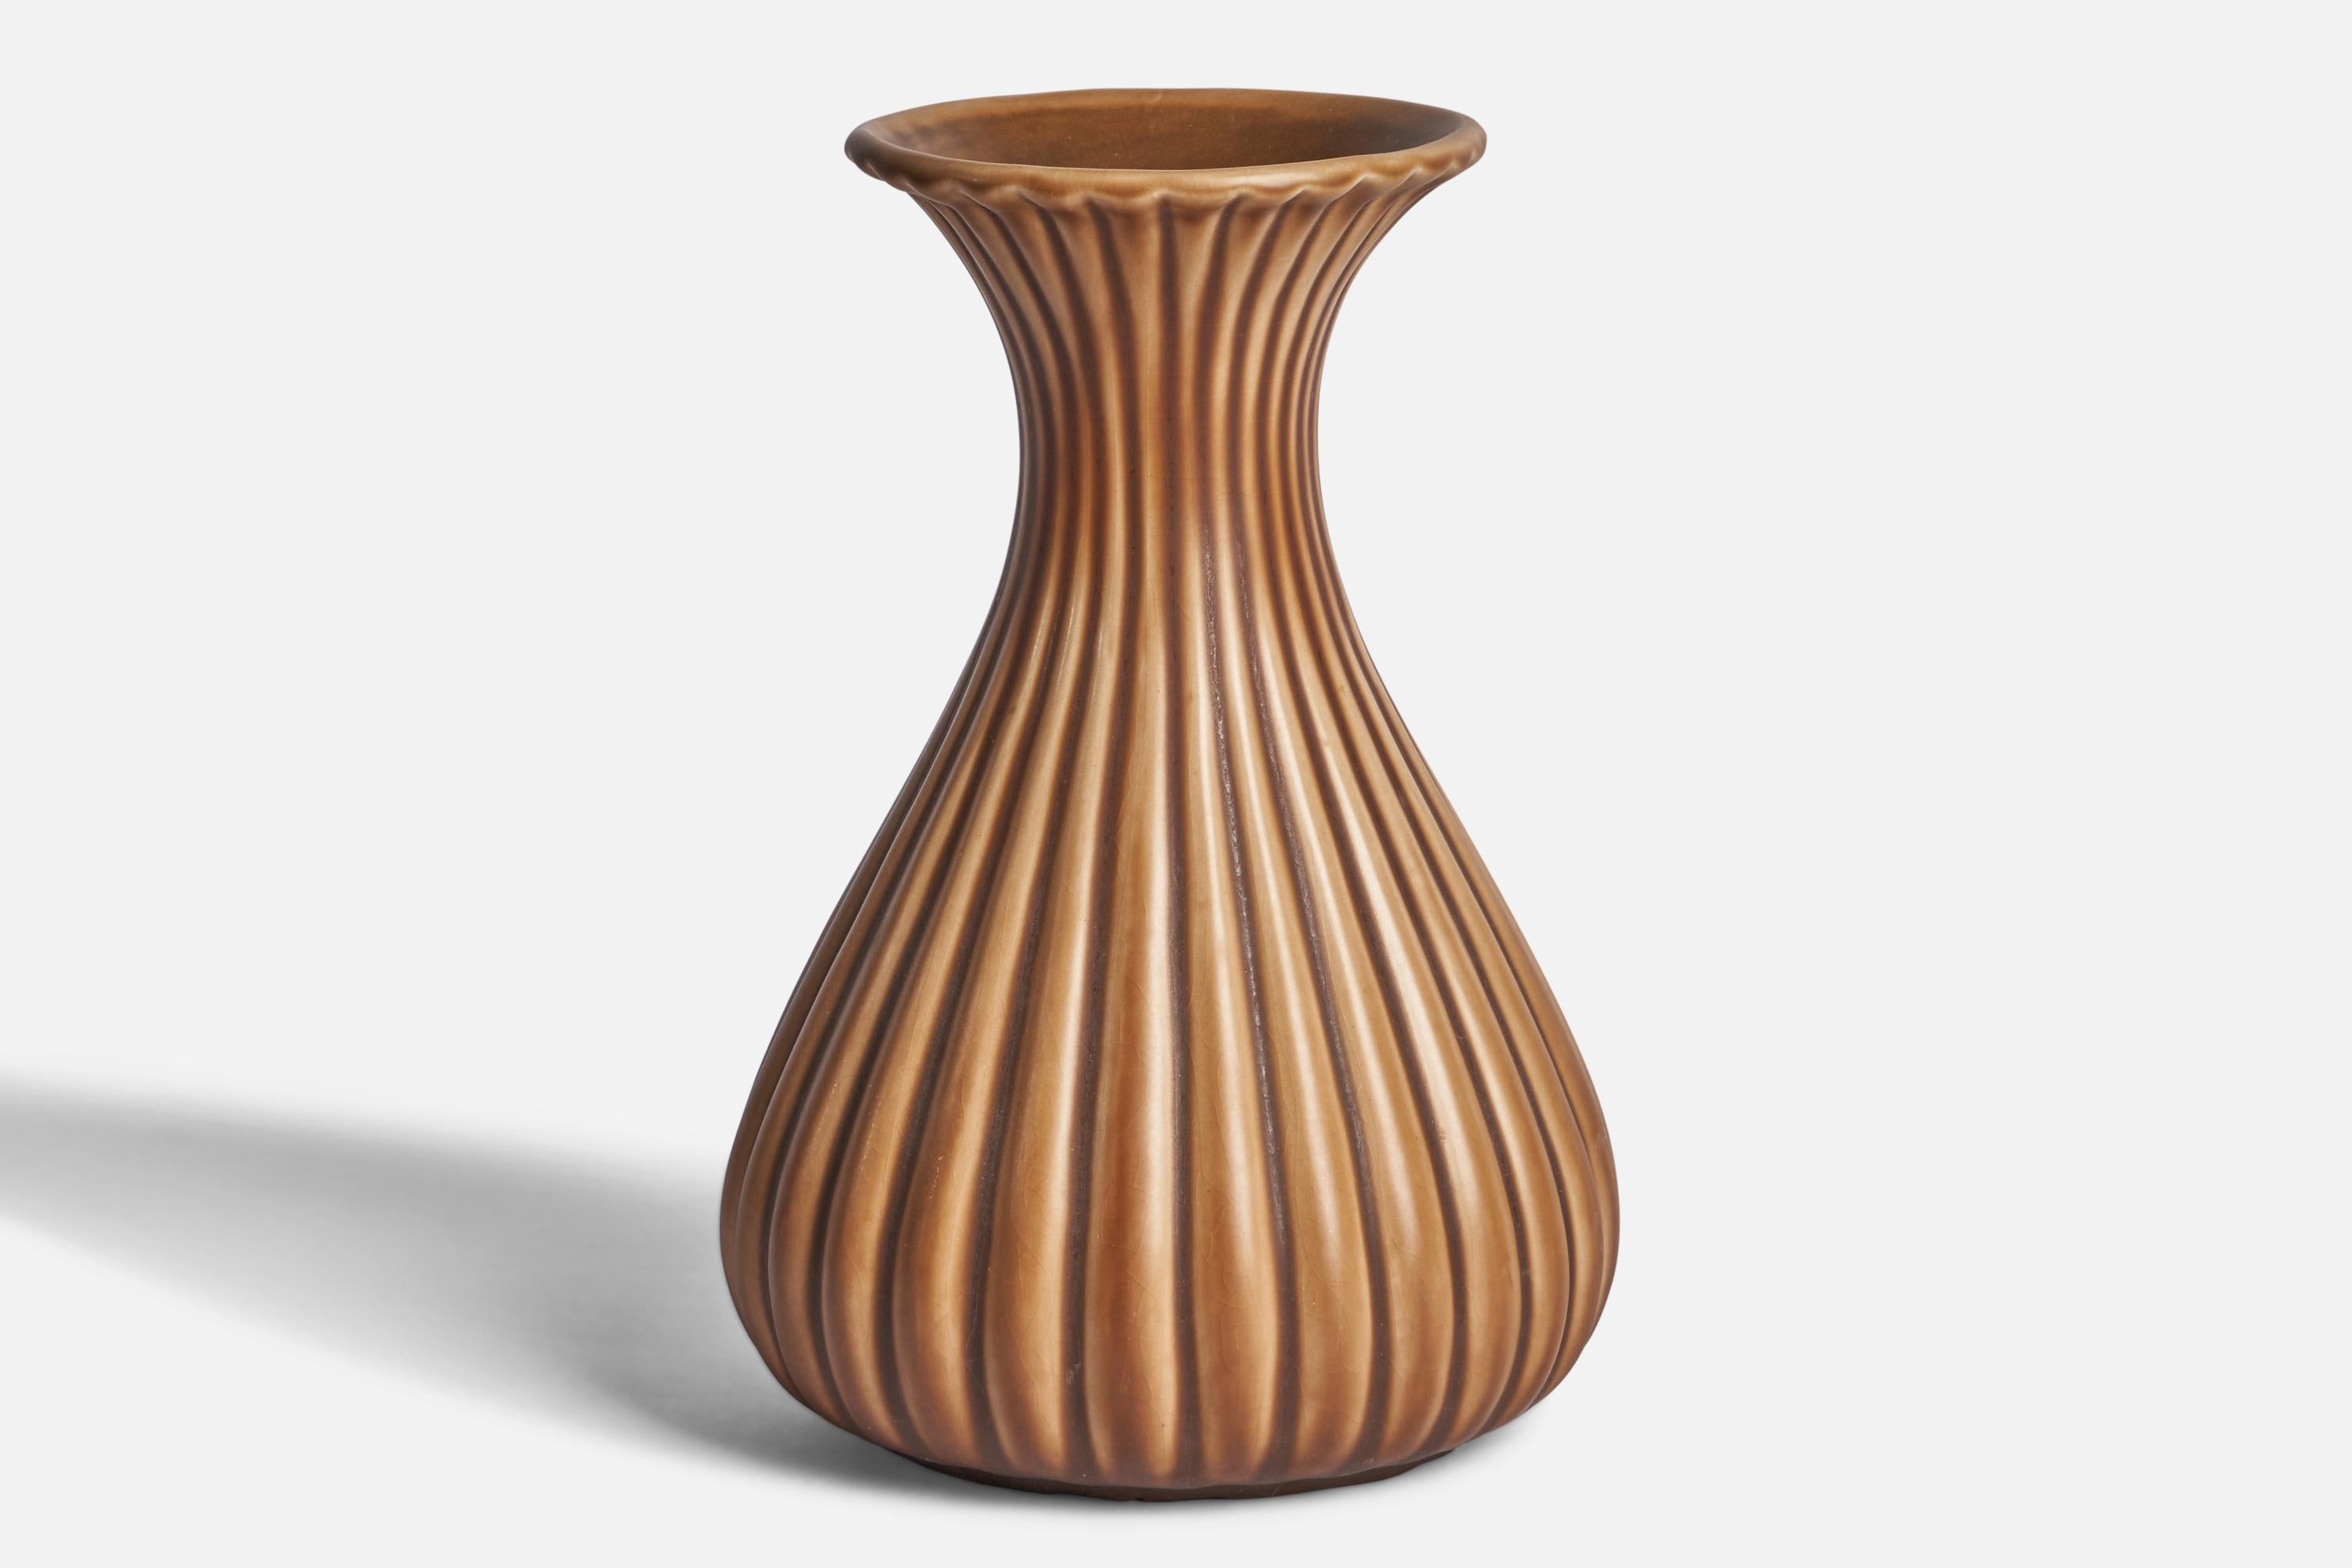 A brown-glazed fluted earthenware vase designed by Ewald Dahlskog and produced by Bo Fajans, Sweden, 1930s.